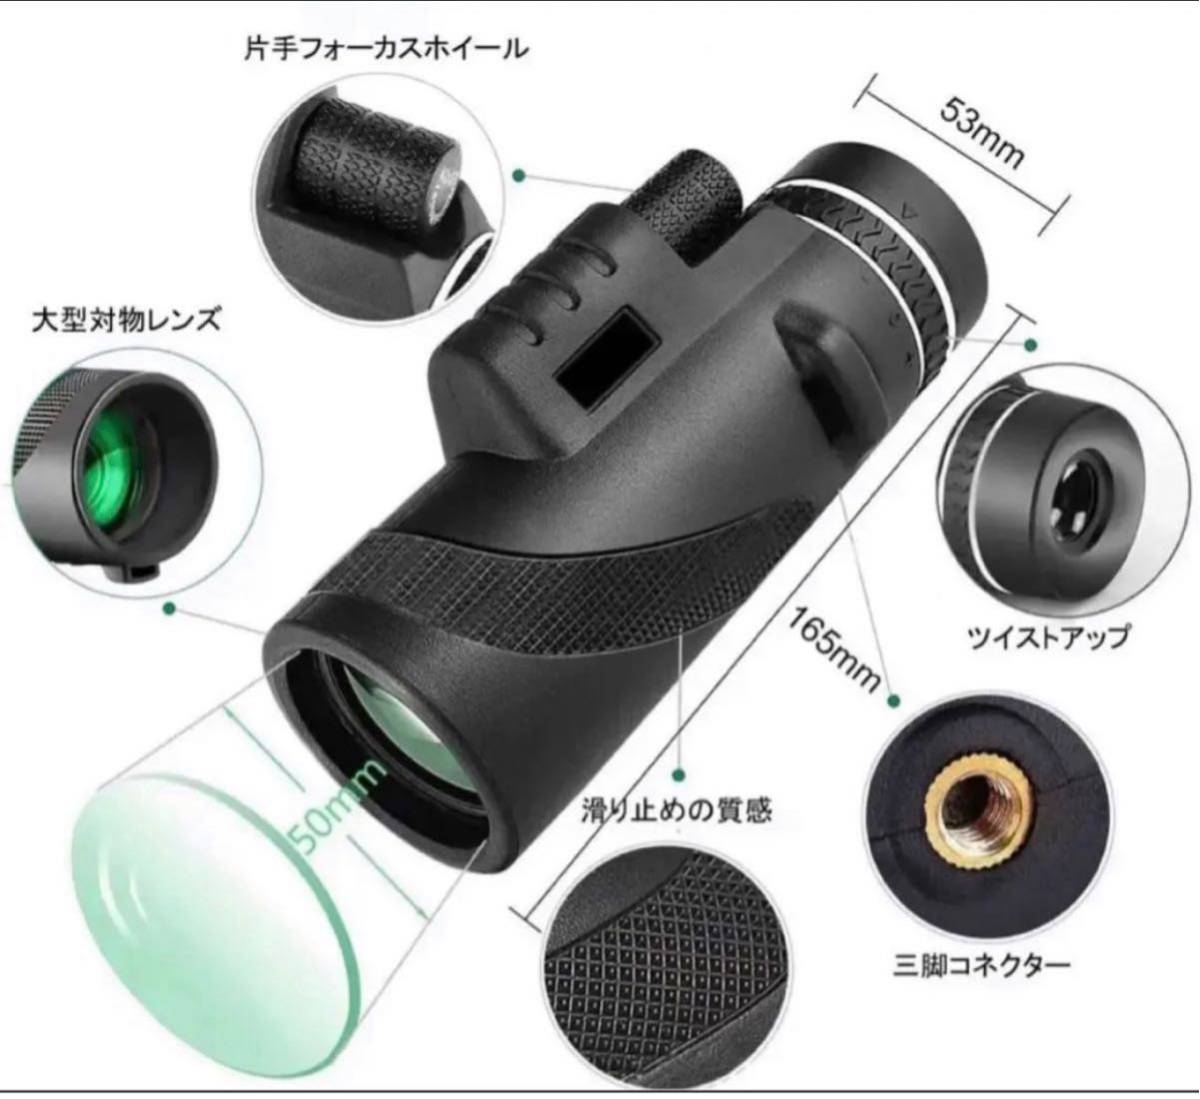  monocle single eye telescope 12X50 height magnification lens smartphone telephoto lens 